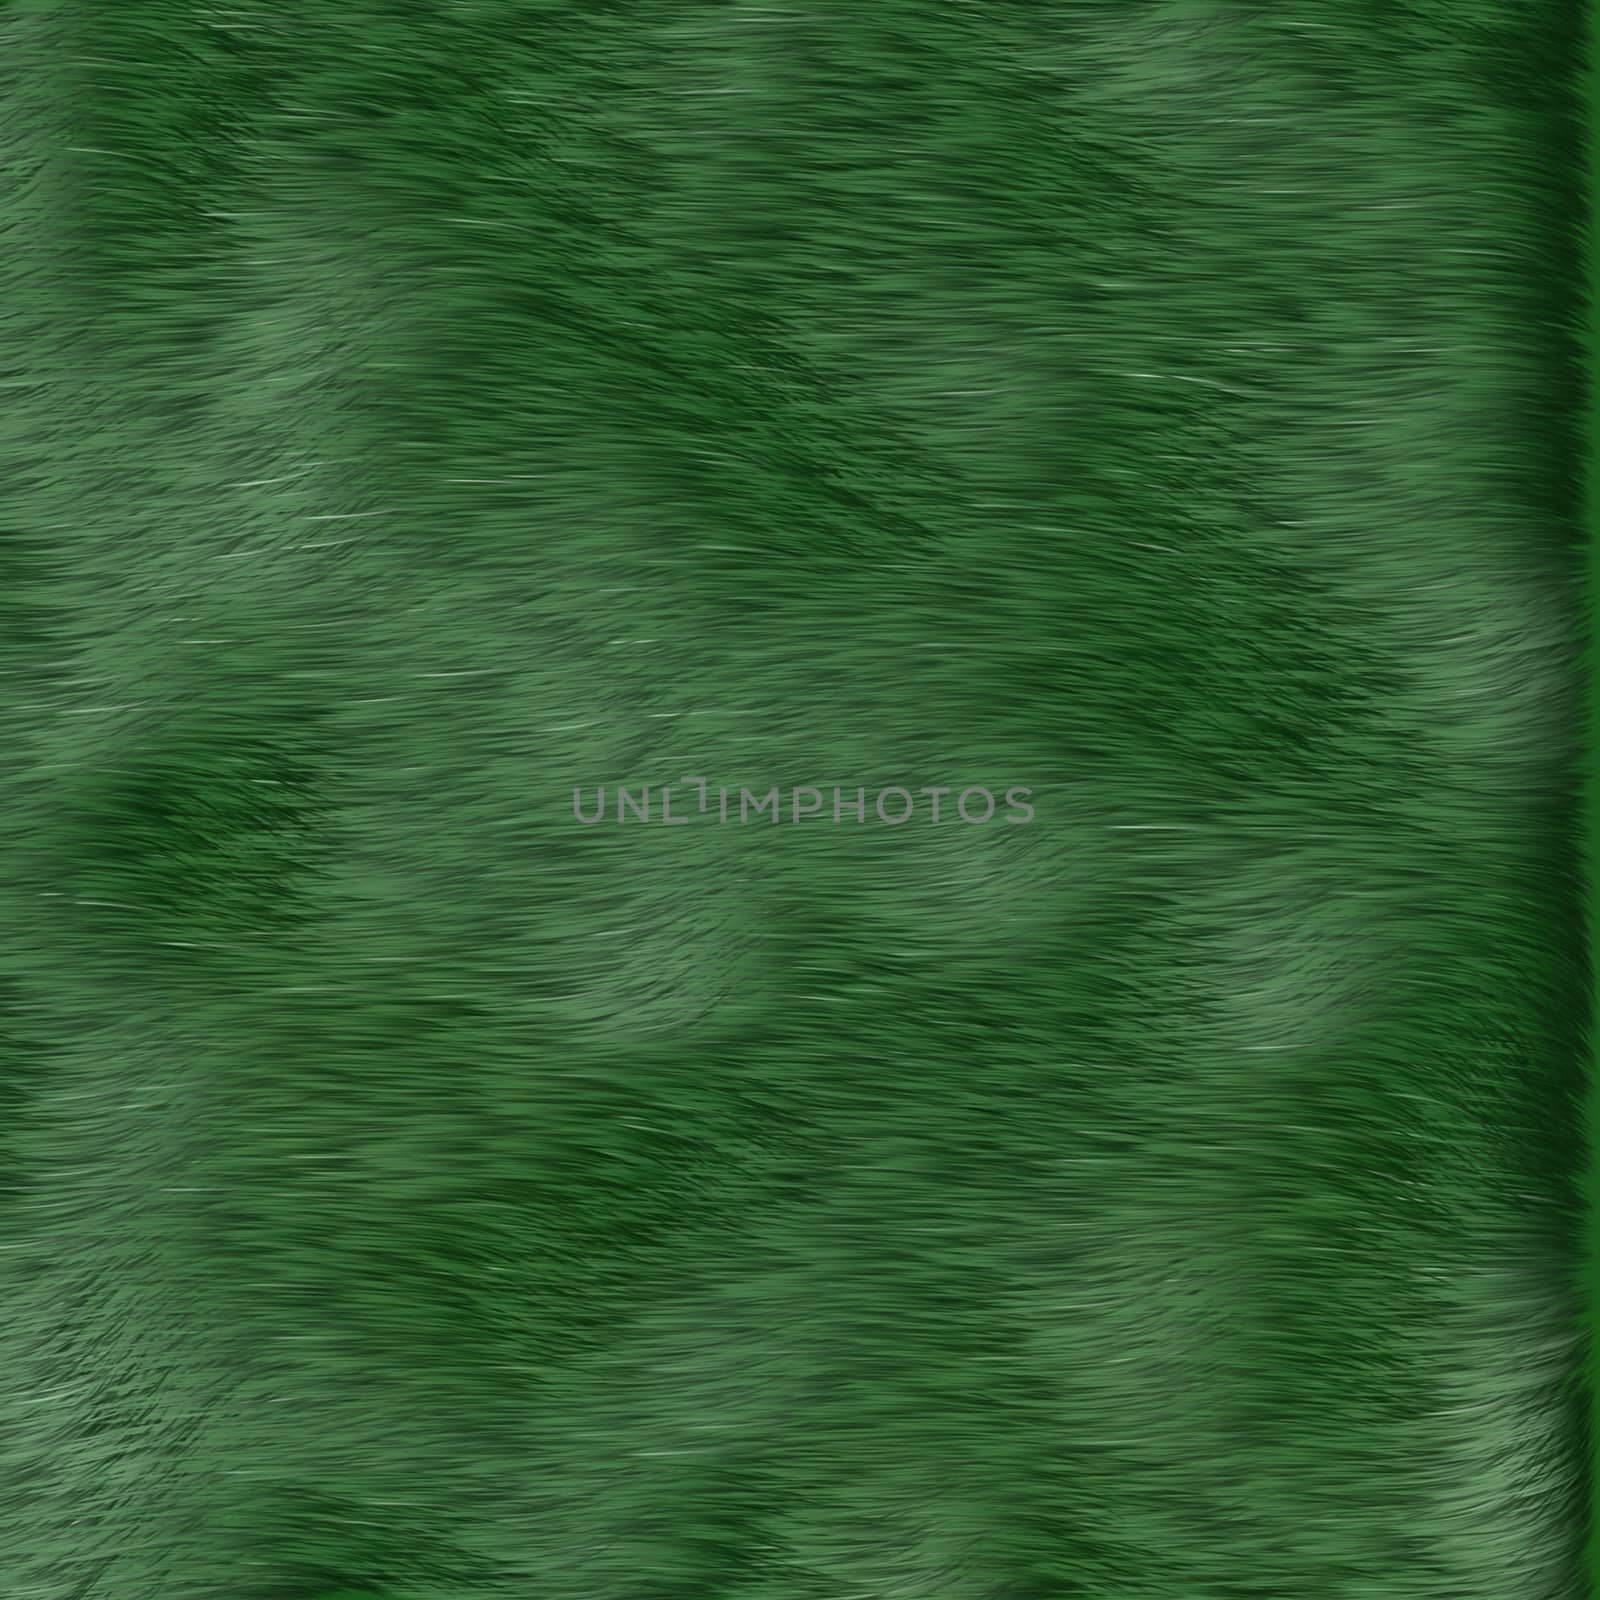 texture of green grass by sfinks